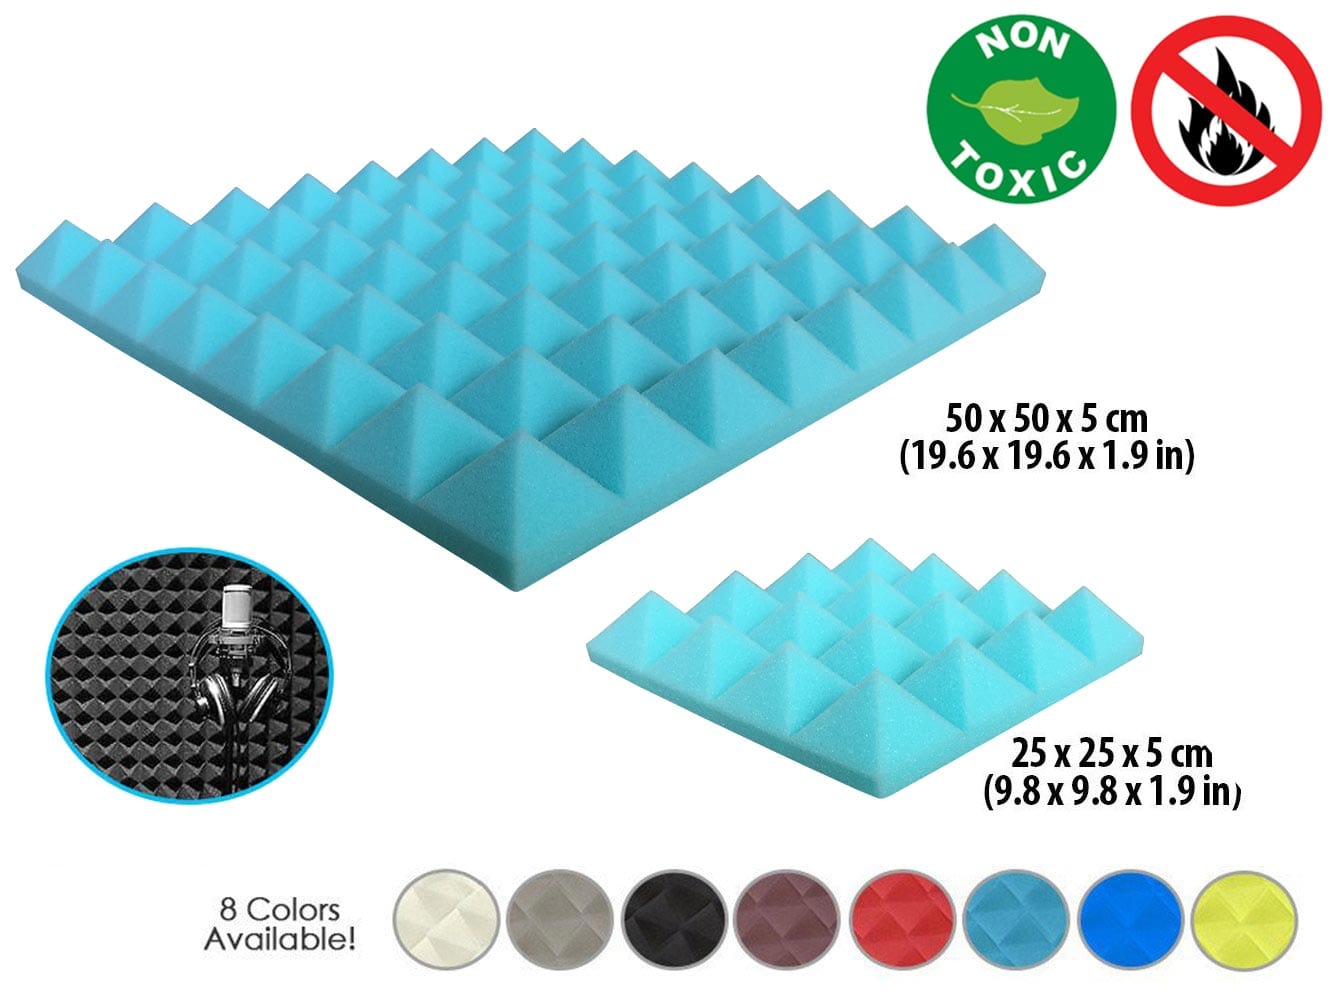 New 1 Pc  Pyramid Tile Acoustic Panel Sound Absorption Studio Soundproof Foam KK1034 Arrowzoom.